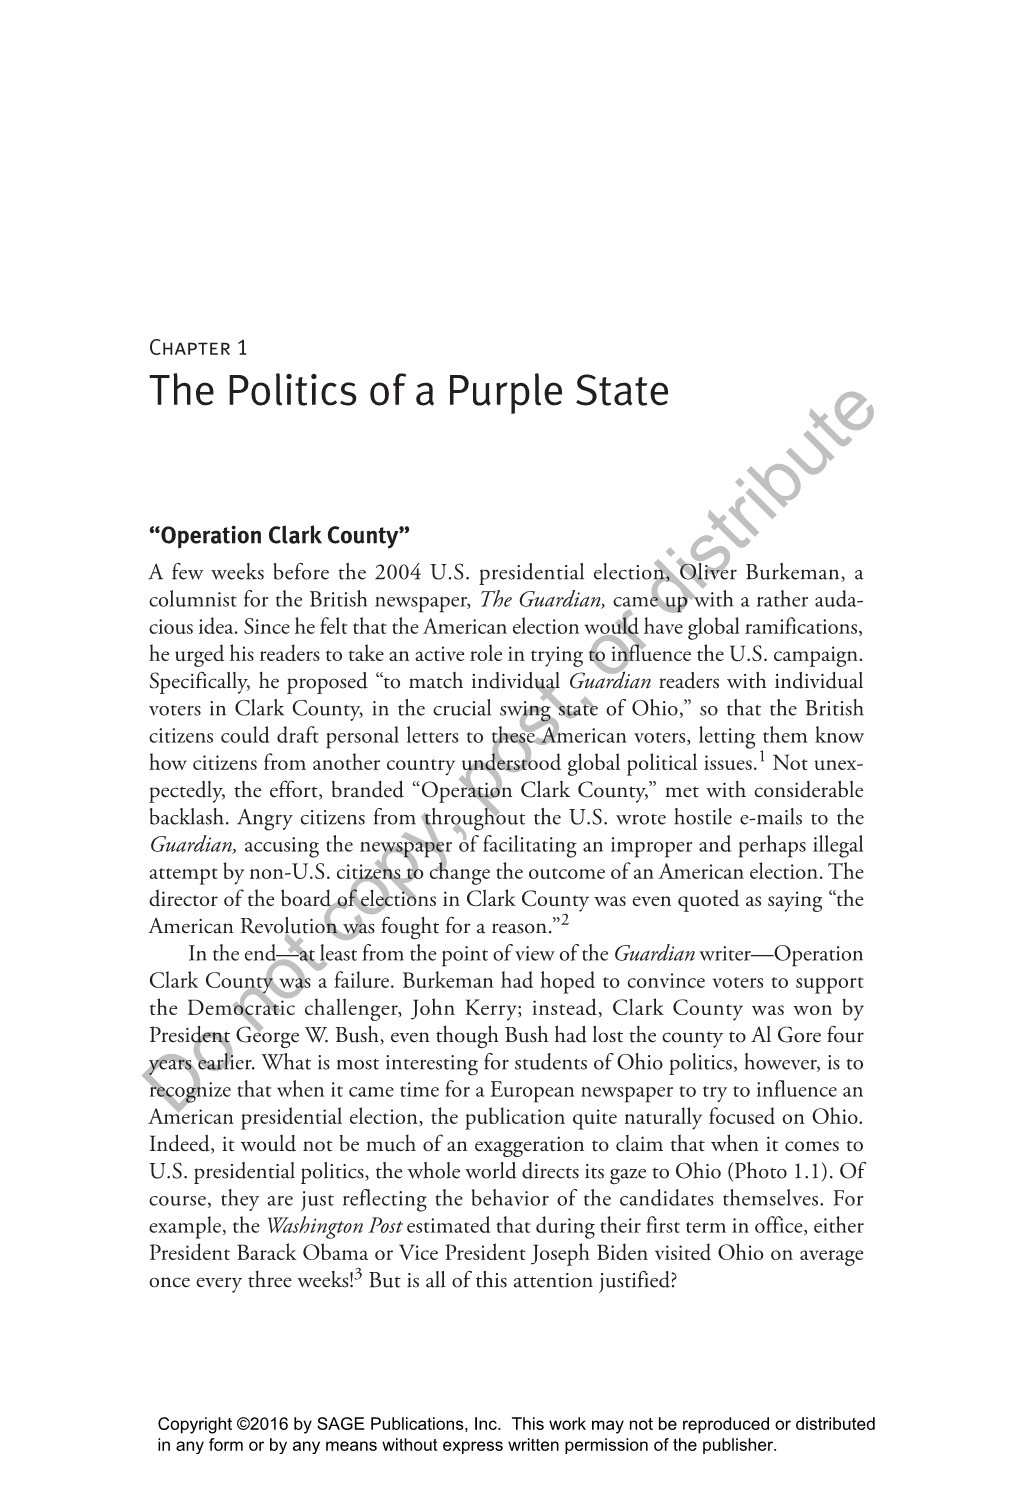 The Politics of a Purple State